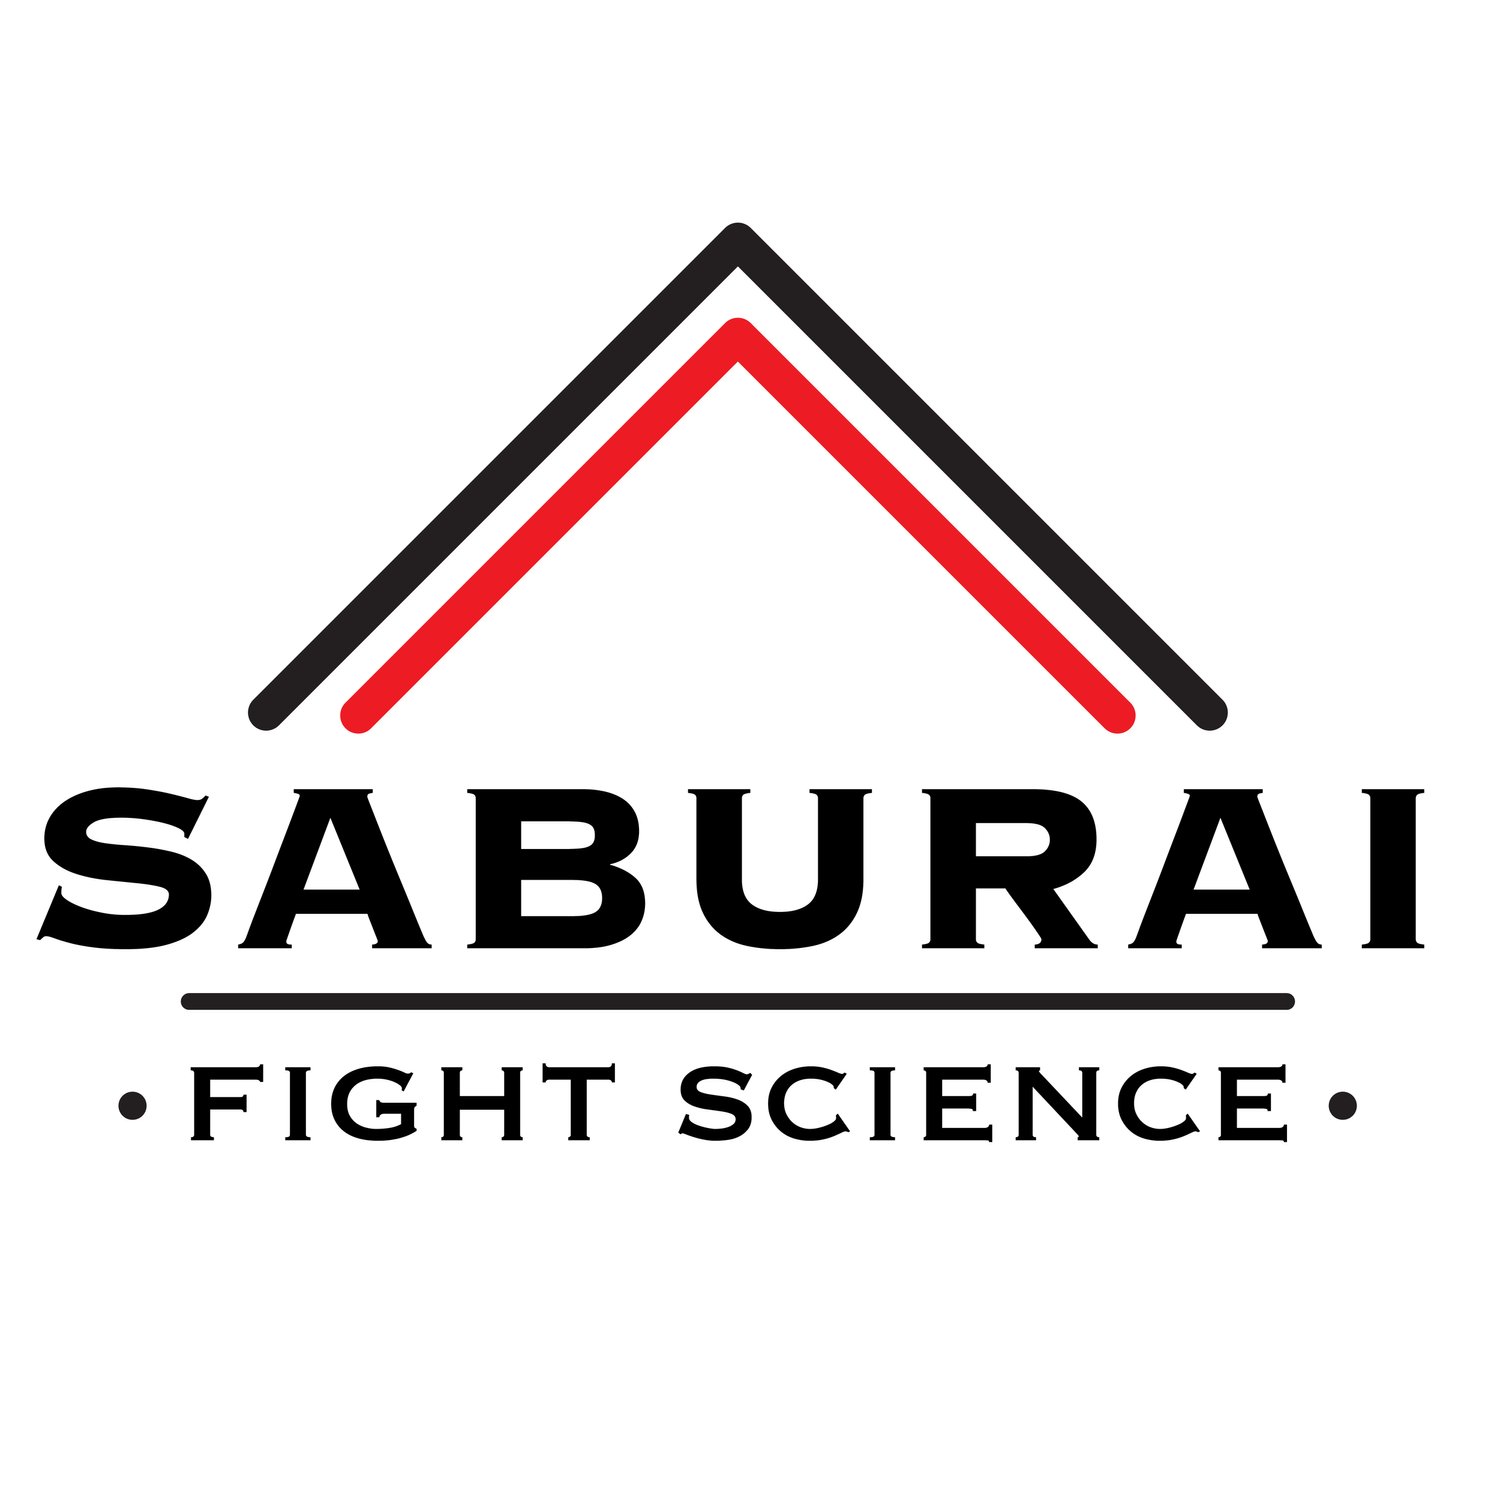 Saburai Fight Science